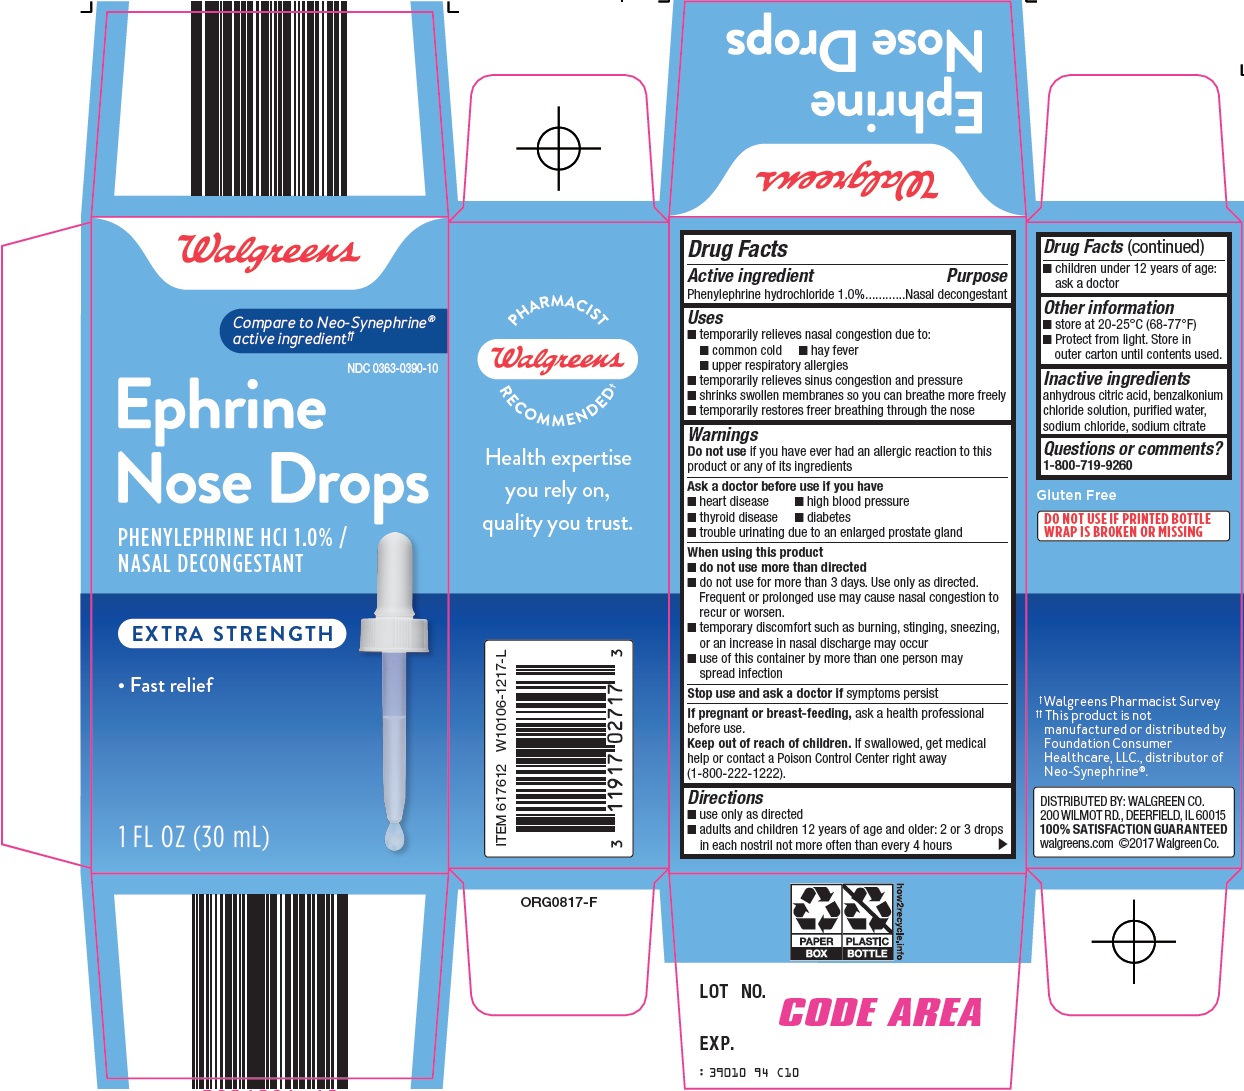 390-94-ephrine nose drops.jpg